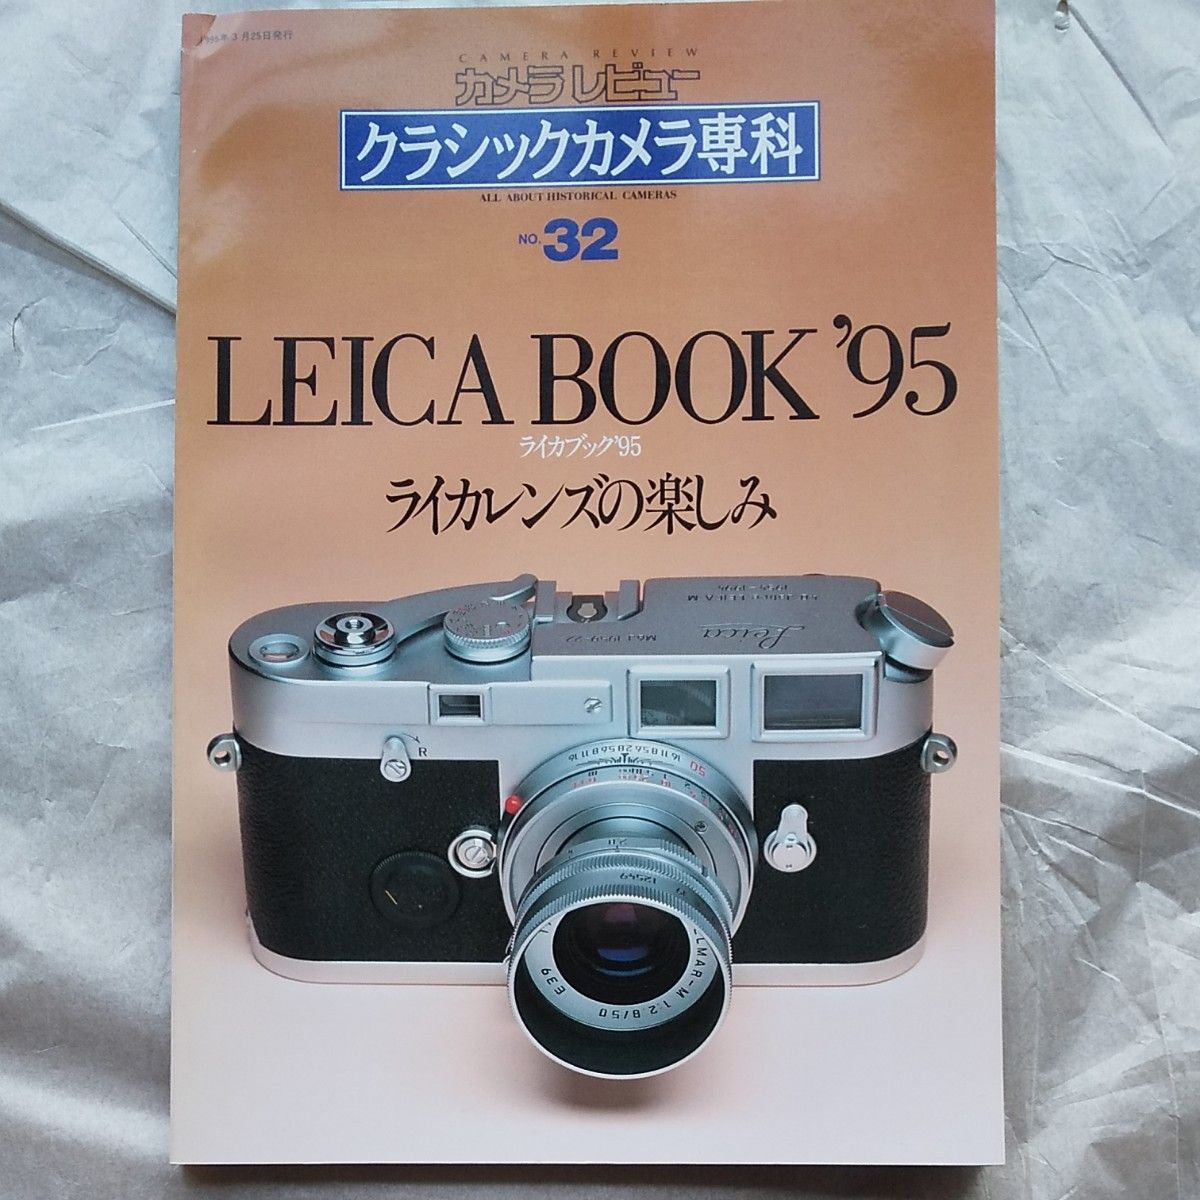  Leica Illustrated Guide III